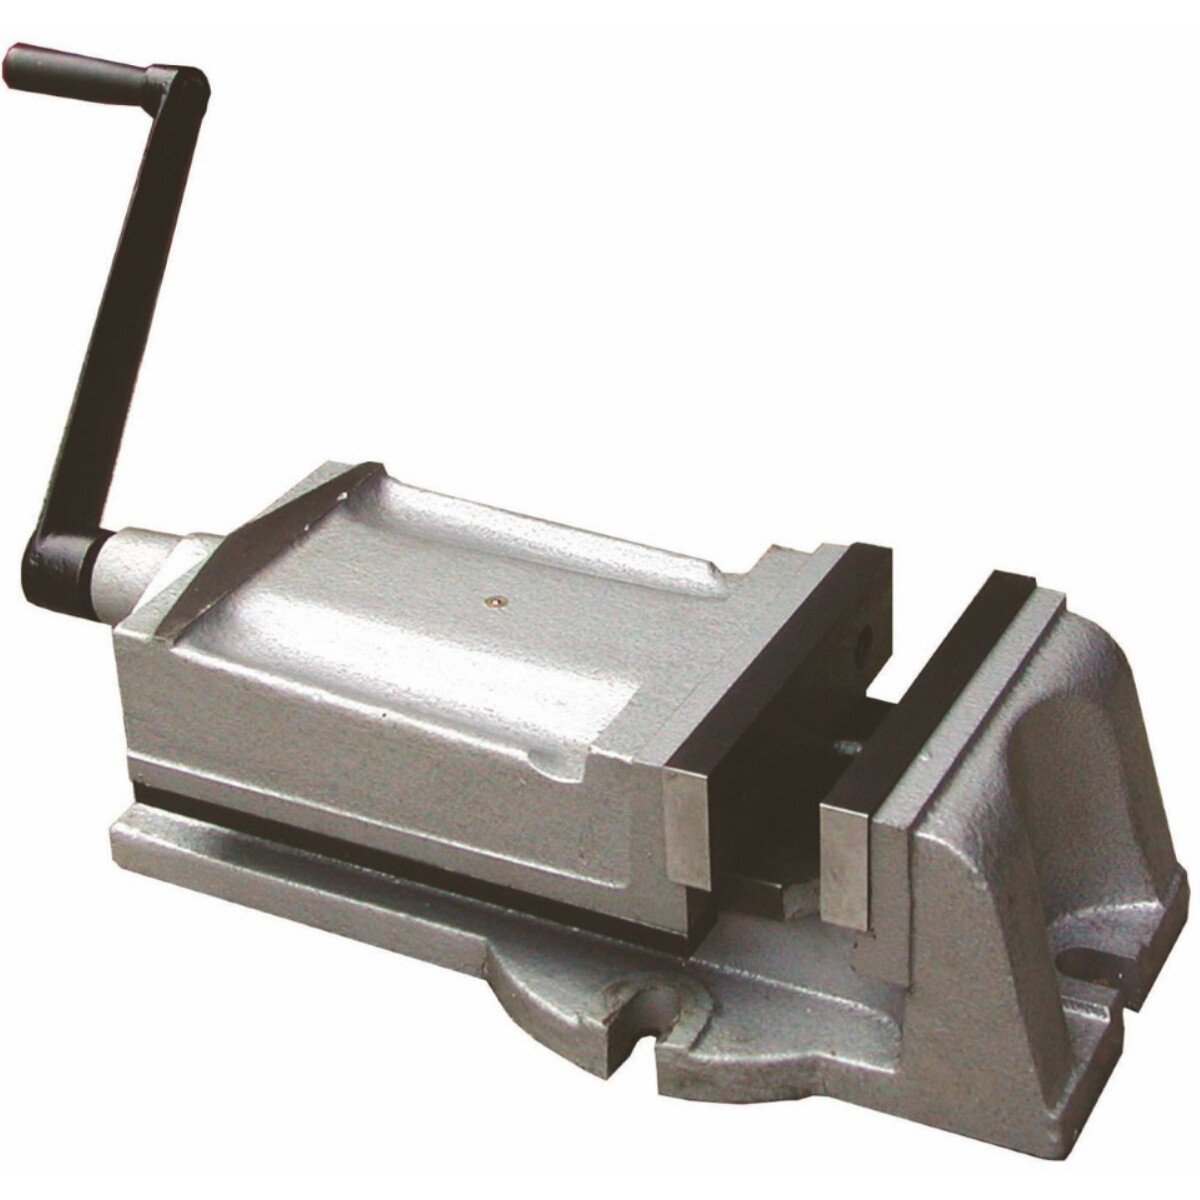 Linear Tools 52-865-160 Heavy Duty Milling Vice 160mm